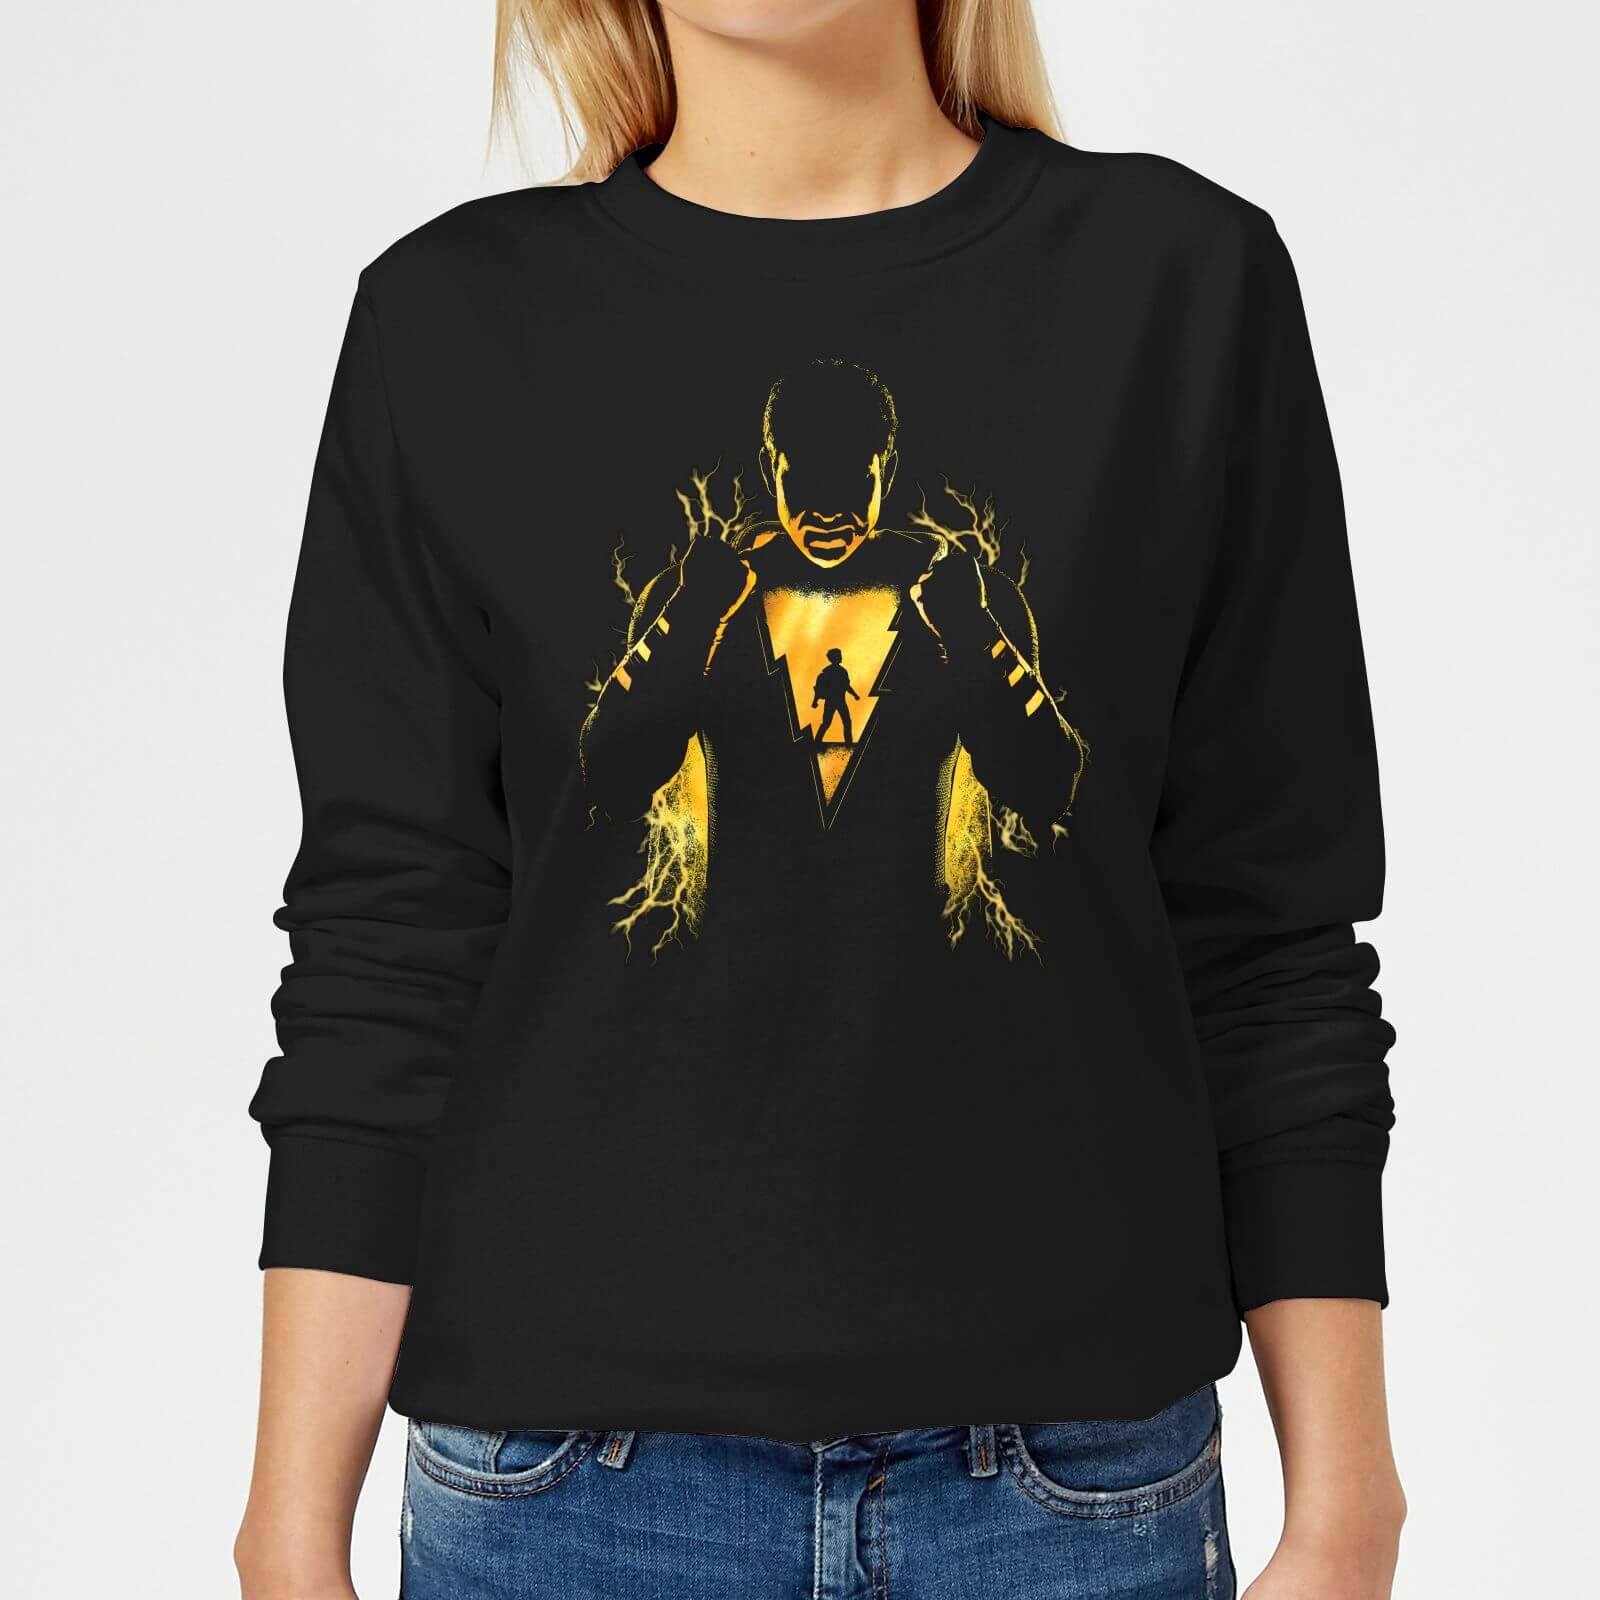 Dc Comics Shazam lightning silhouette women's sweatshirt - black - xxl - black